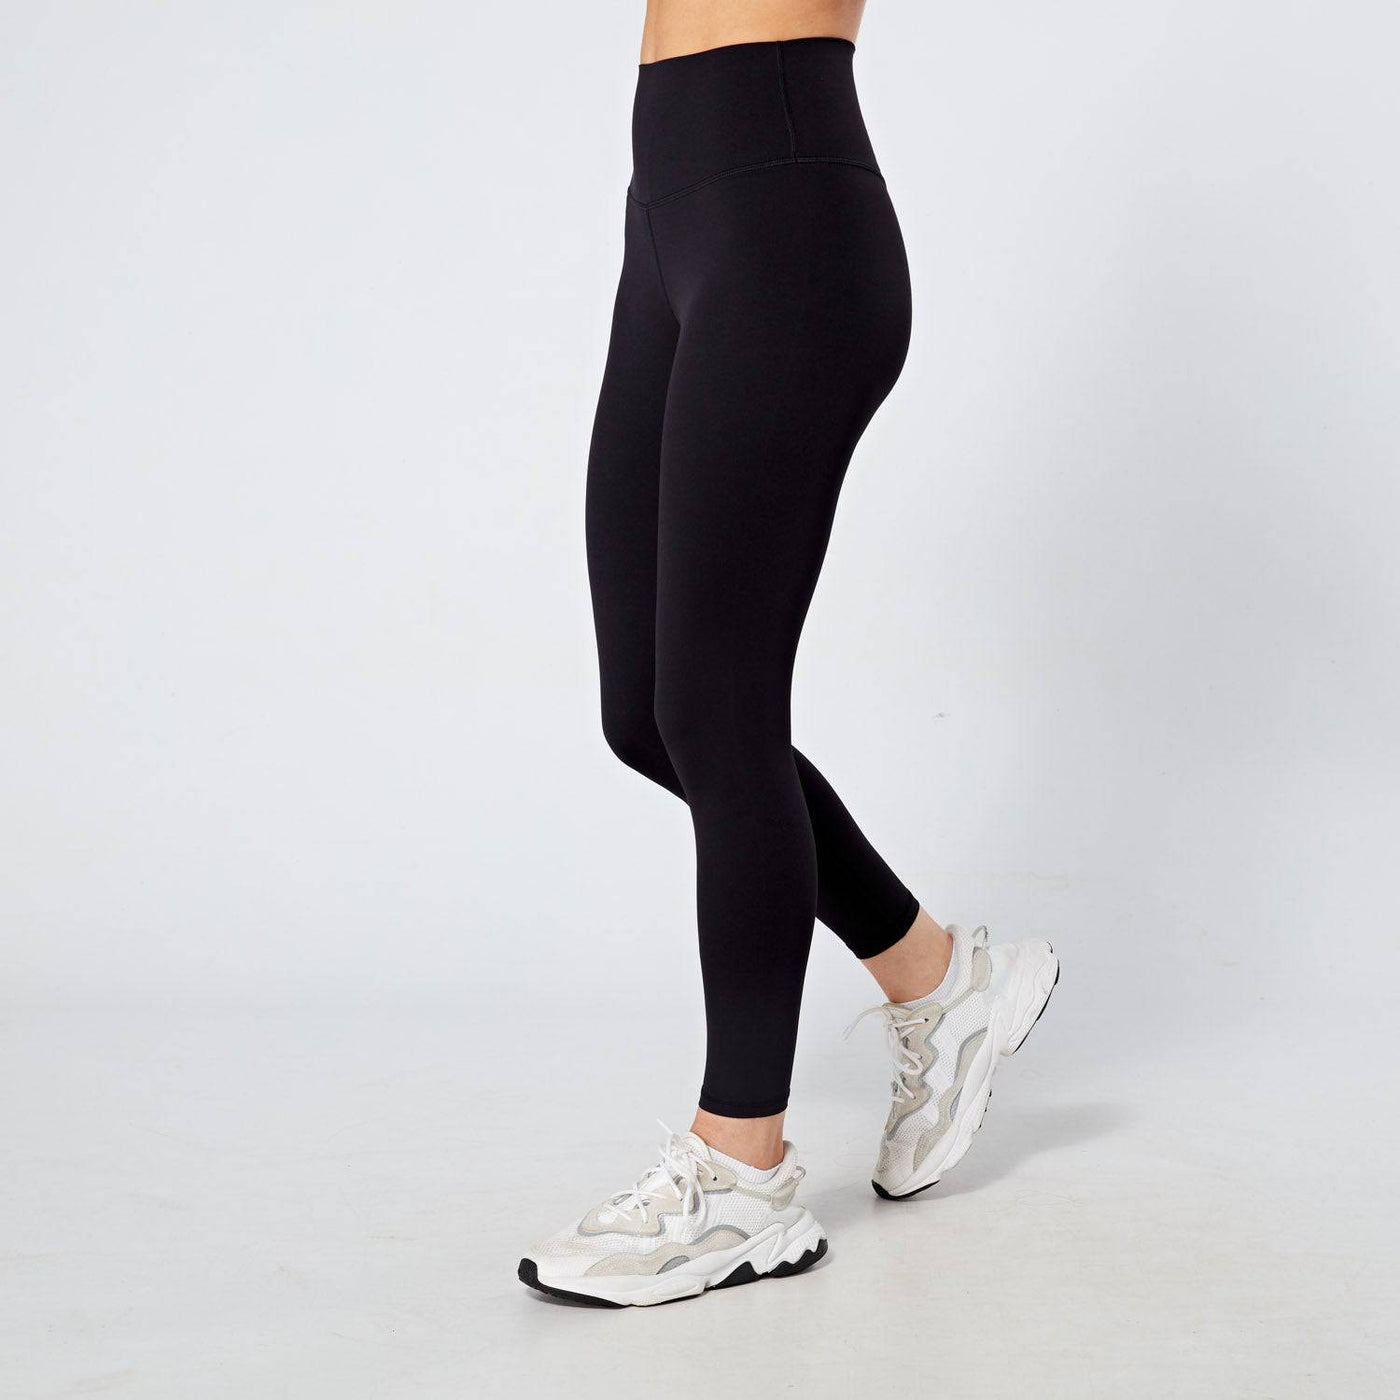 Jessica London Women's Plus Size Straight Leggings, 3x - Black